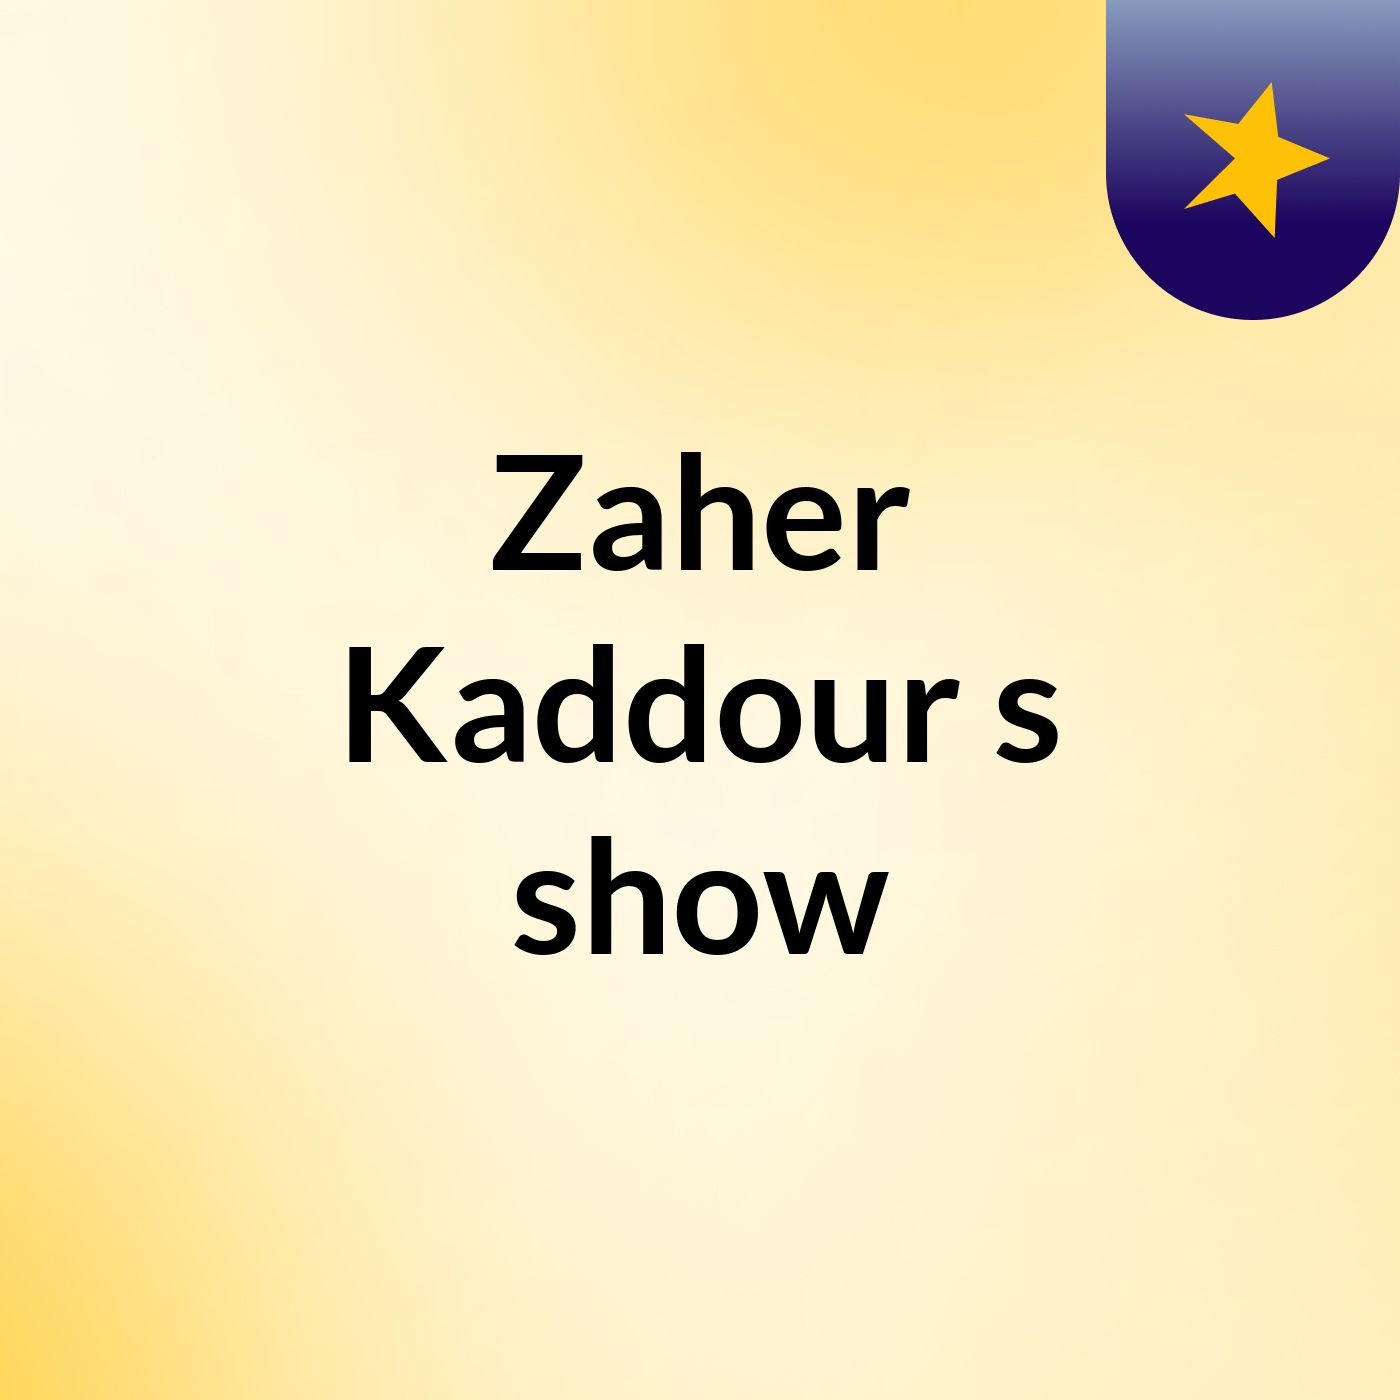 Zaher Kaddour's show